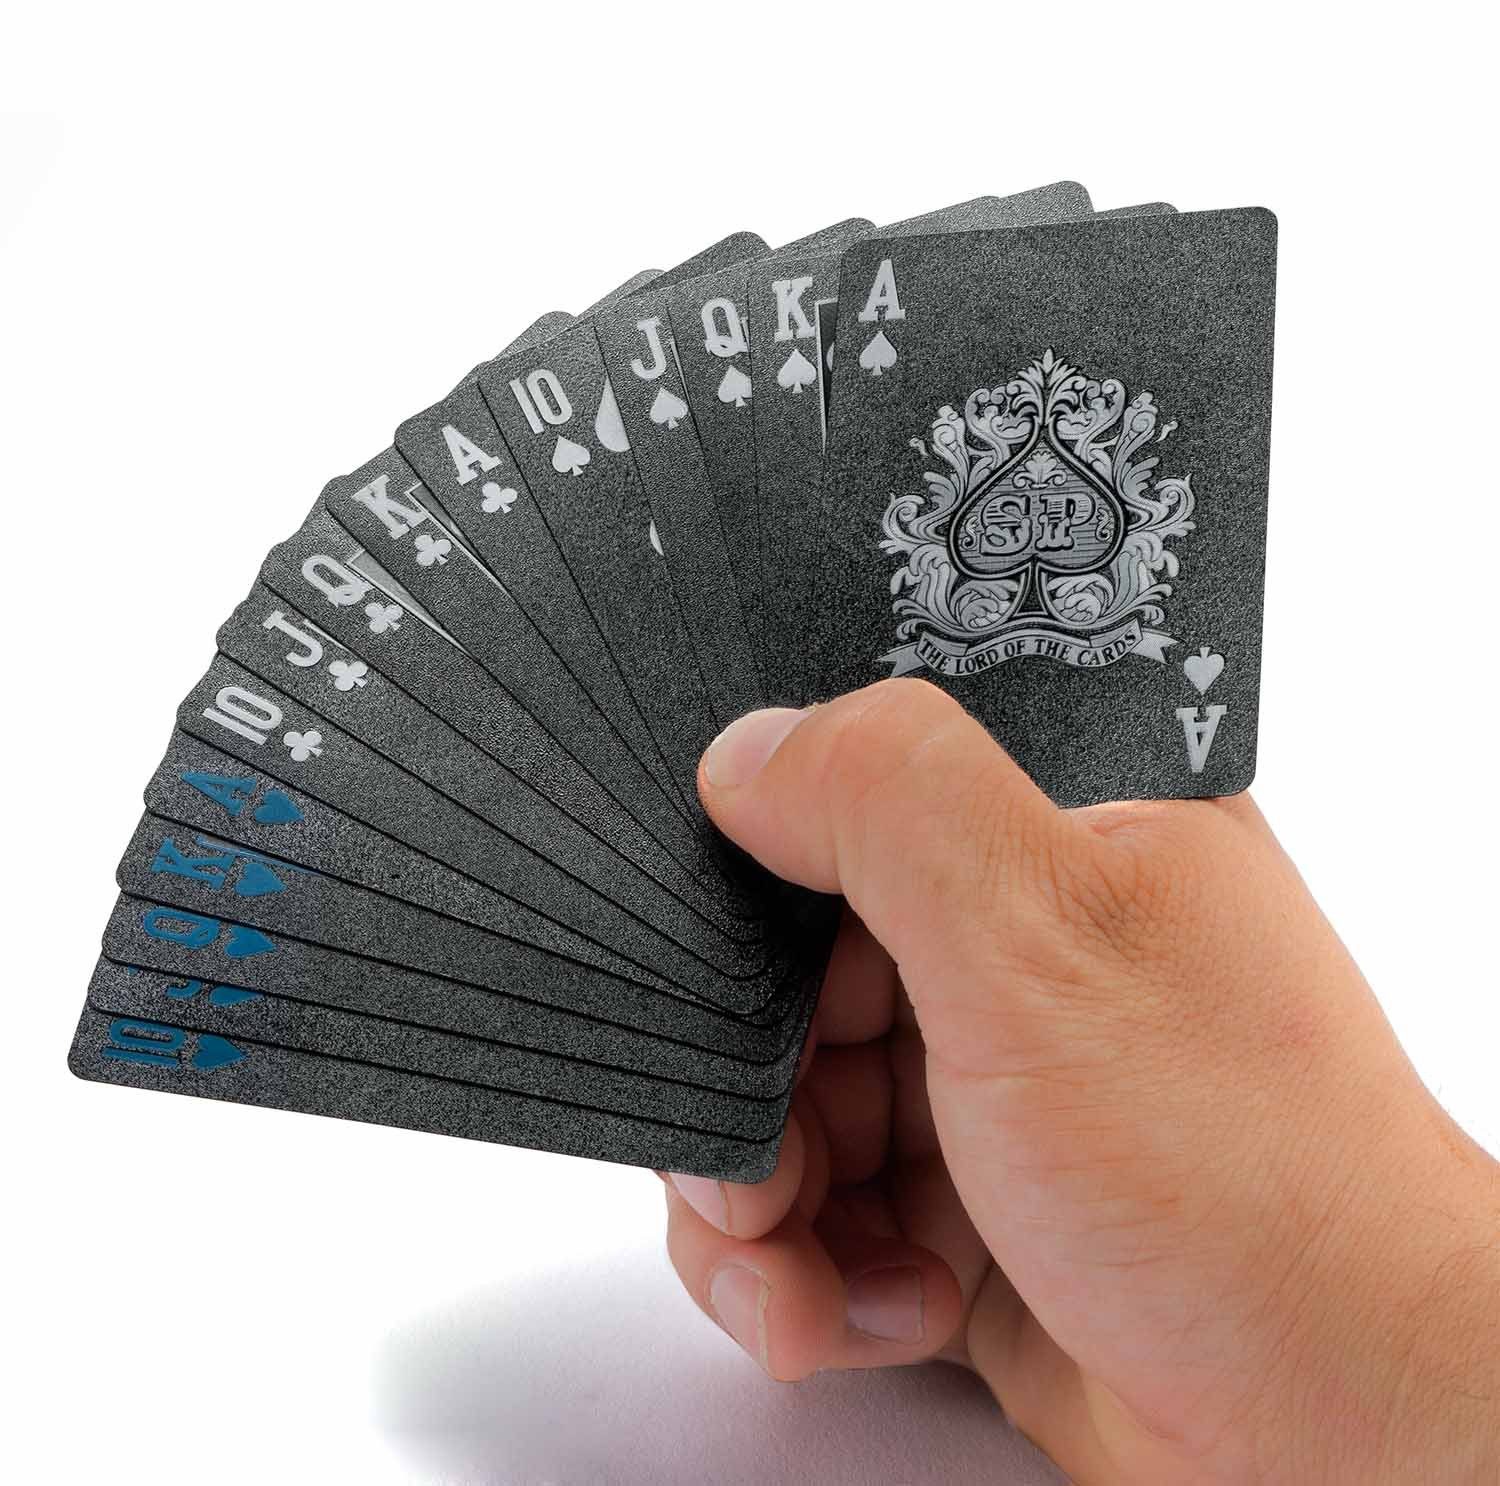 Poker-Deck aus Spiel, Goods+Gadgets PVC Pokerkarten Spiel-Karten Kunststoff,